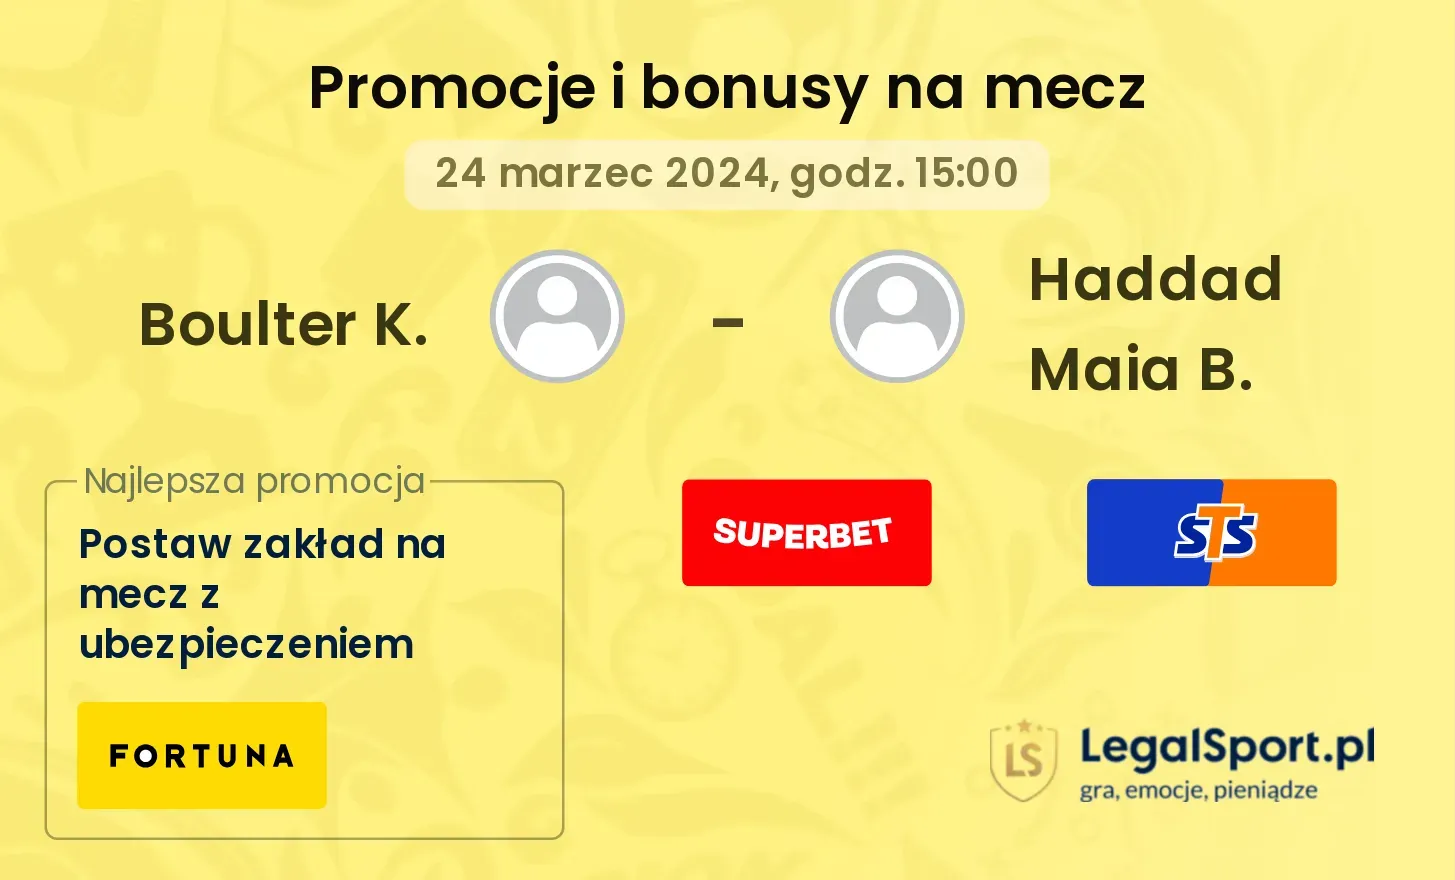 Boulter K. - Haddad Maia B. promocje bonusy na mecz